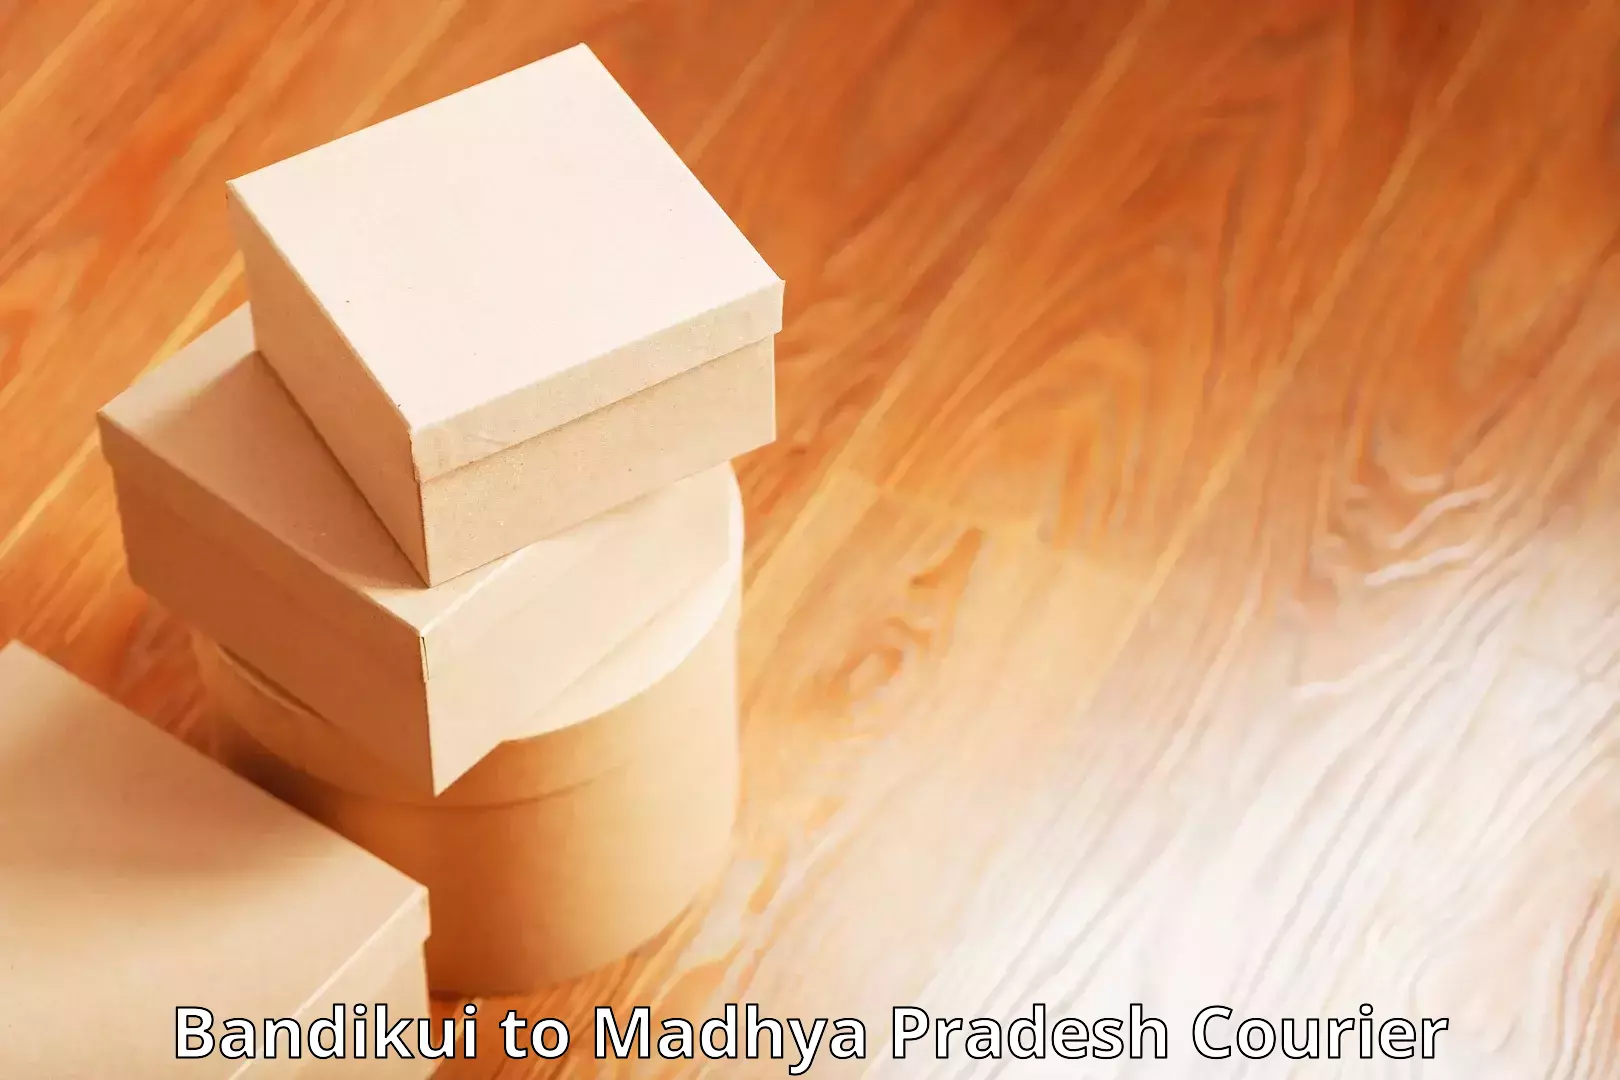 Customizable delivery plans Bandikui to Maheshwar